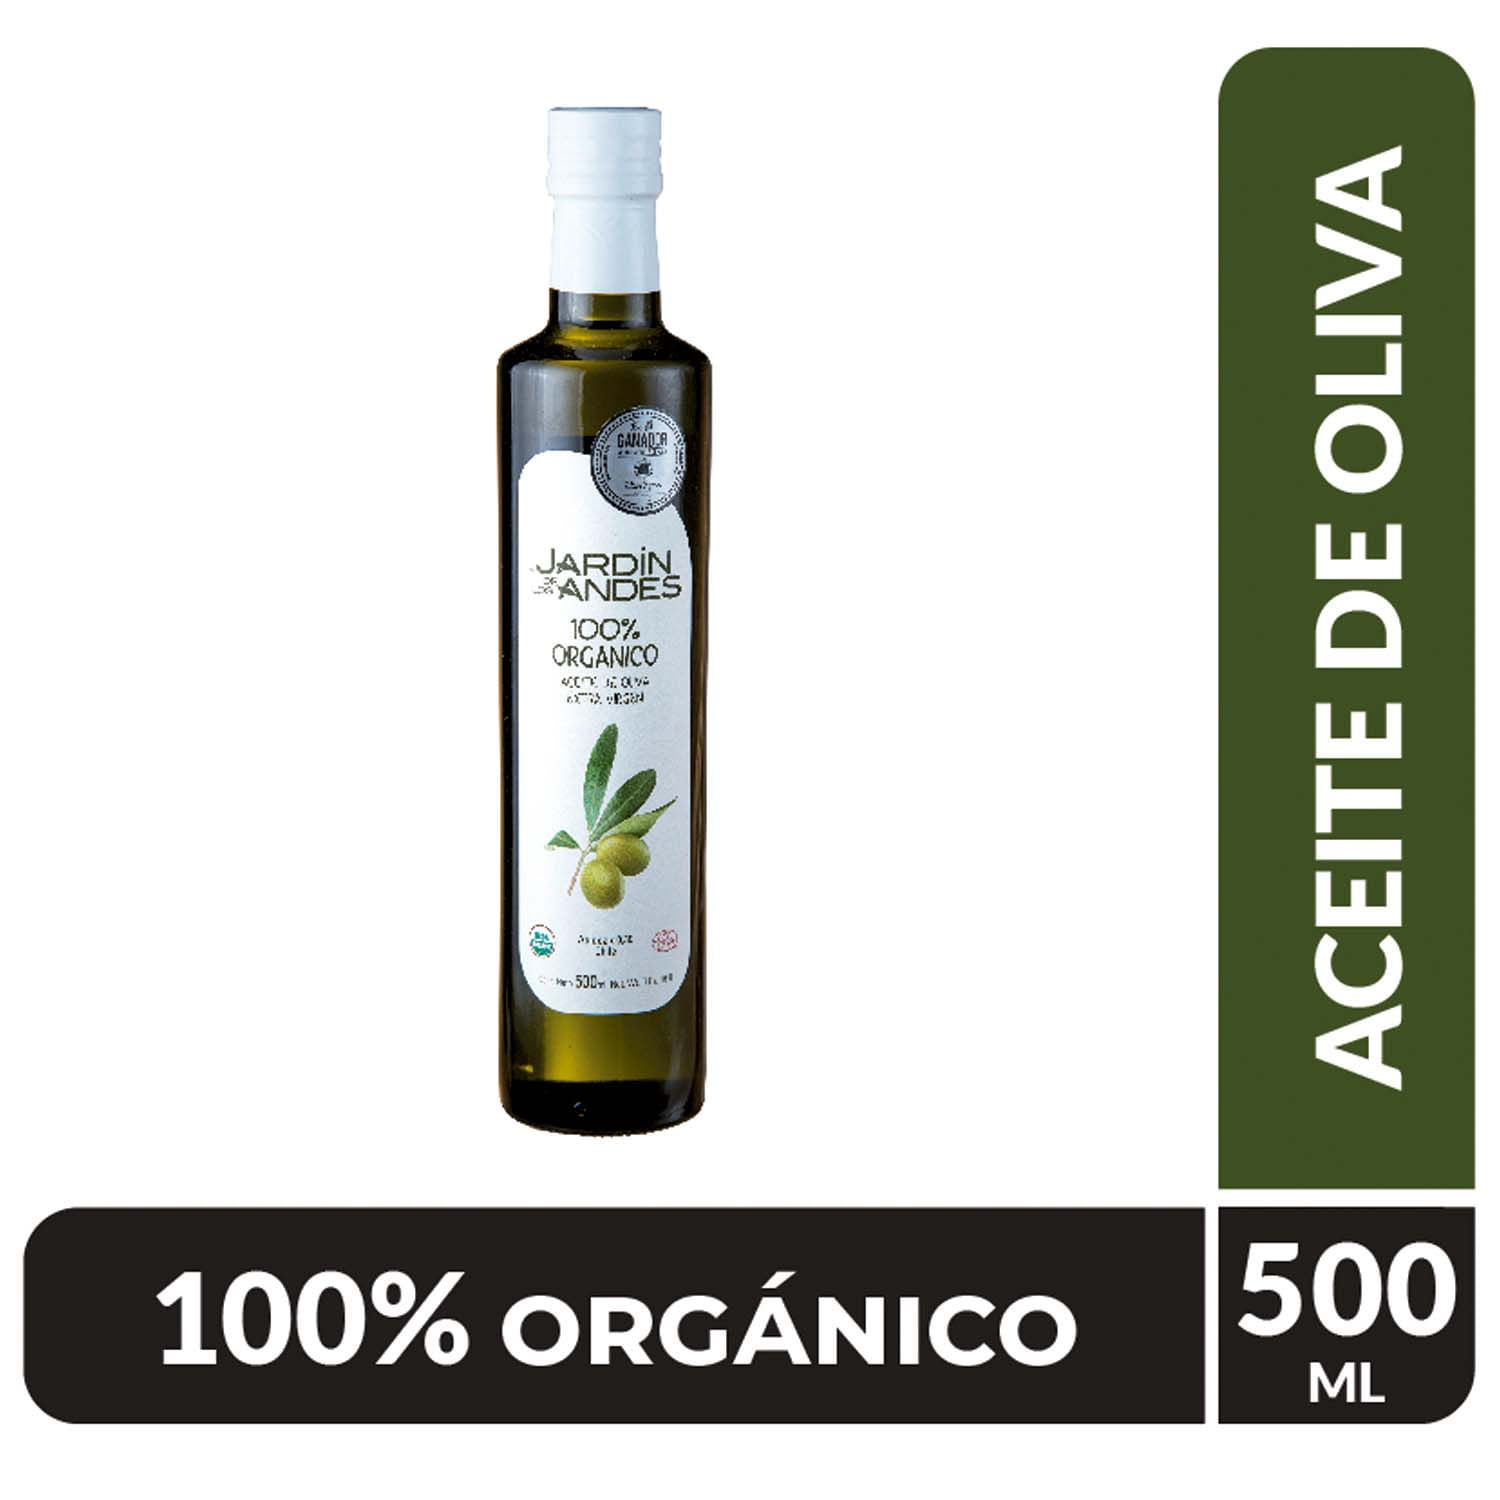 Aceite de Coco extra virgen orgánico 500 ml